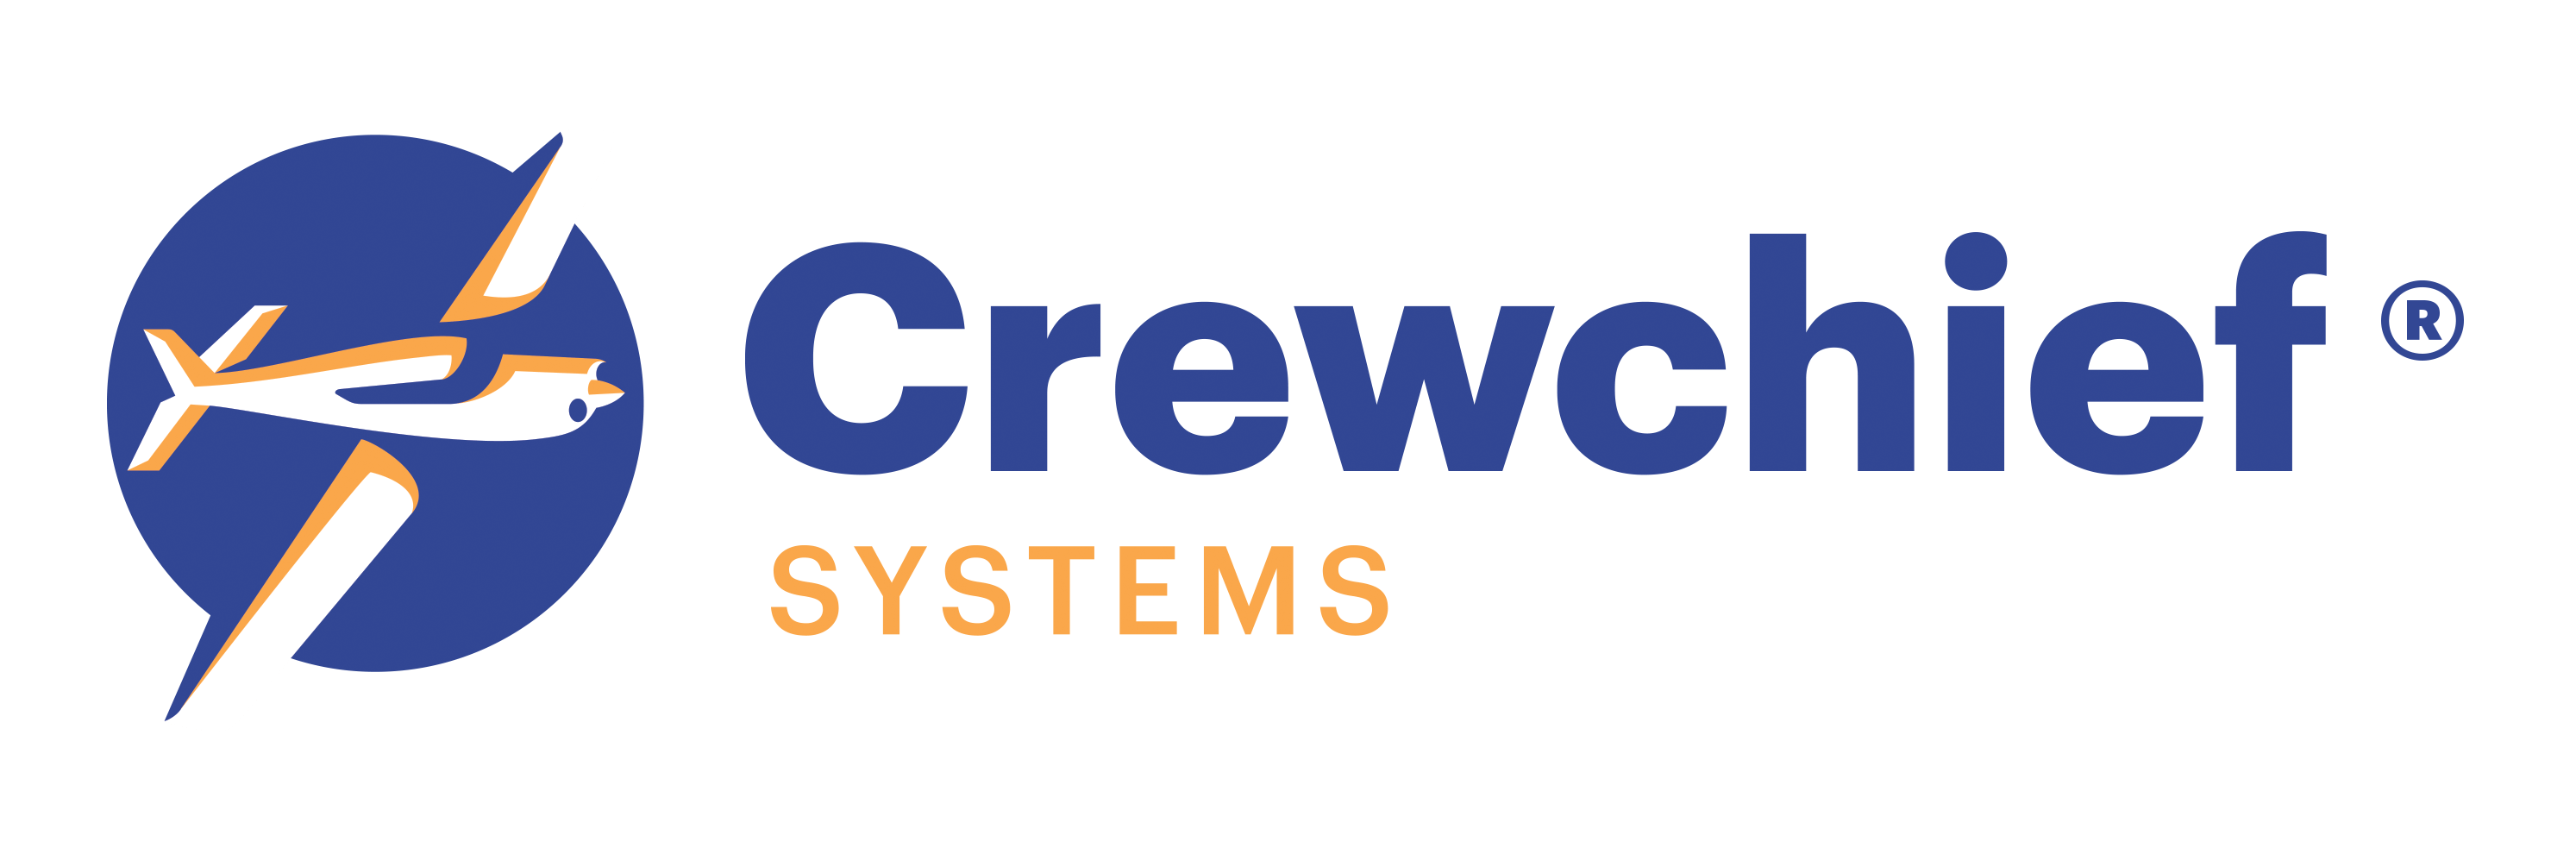 crewchief aviation maintenance systems logo